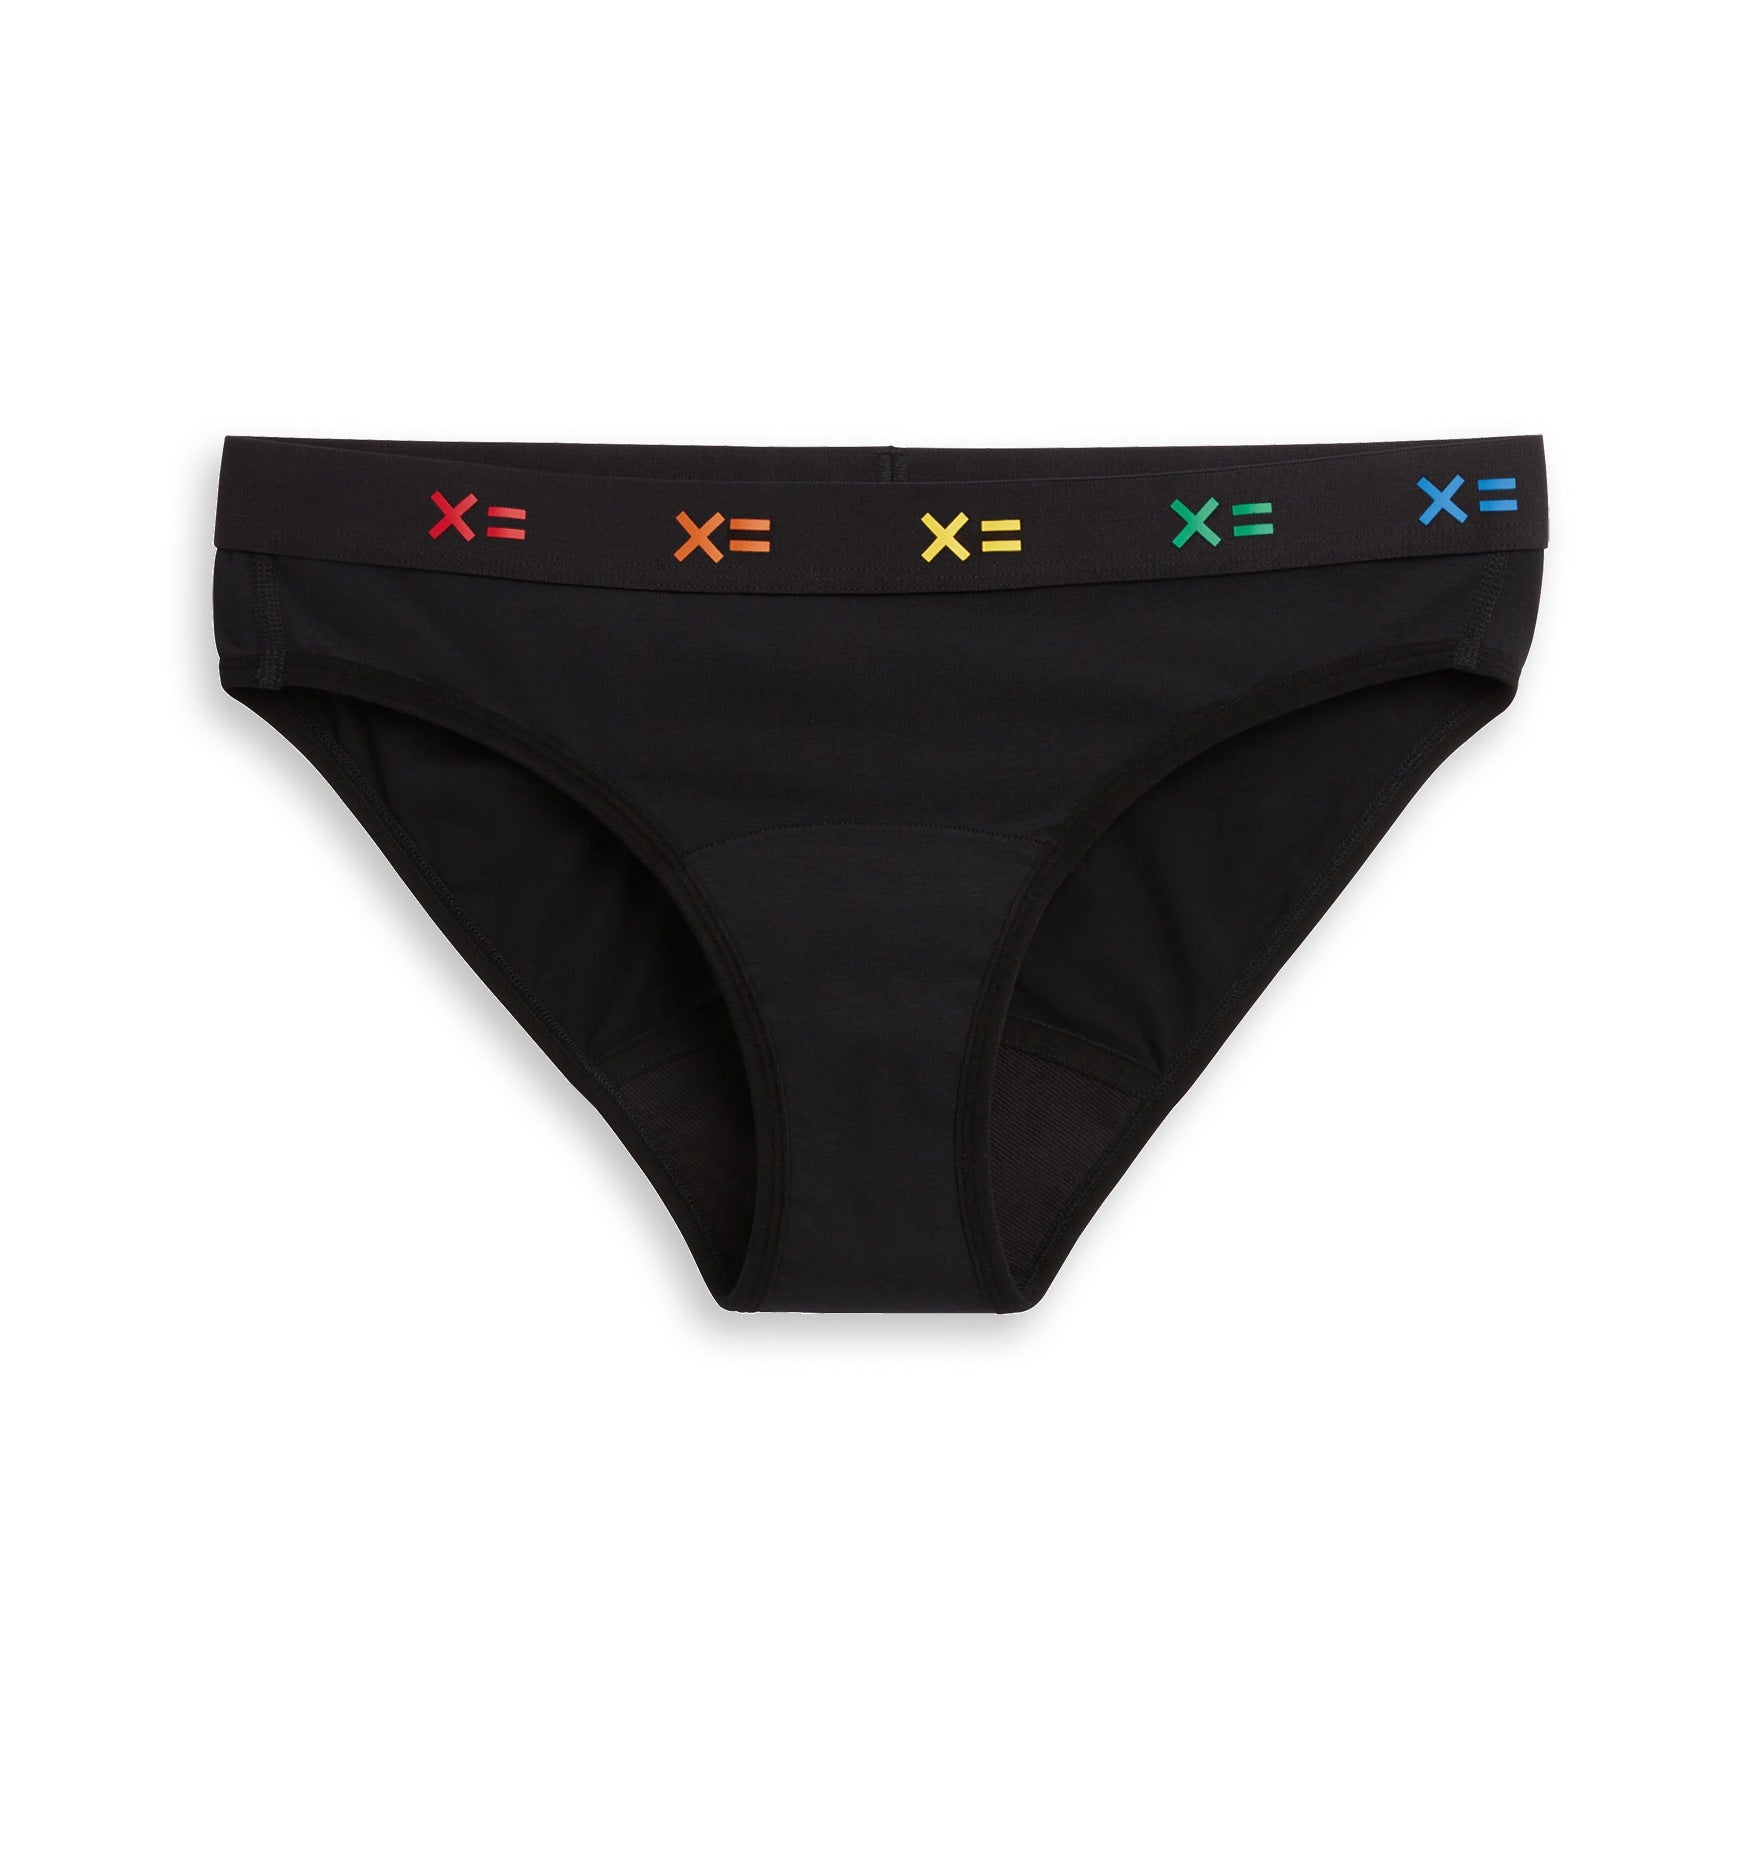 Tucking Bikini 3-Pack - X= Black – TomboyX